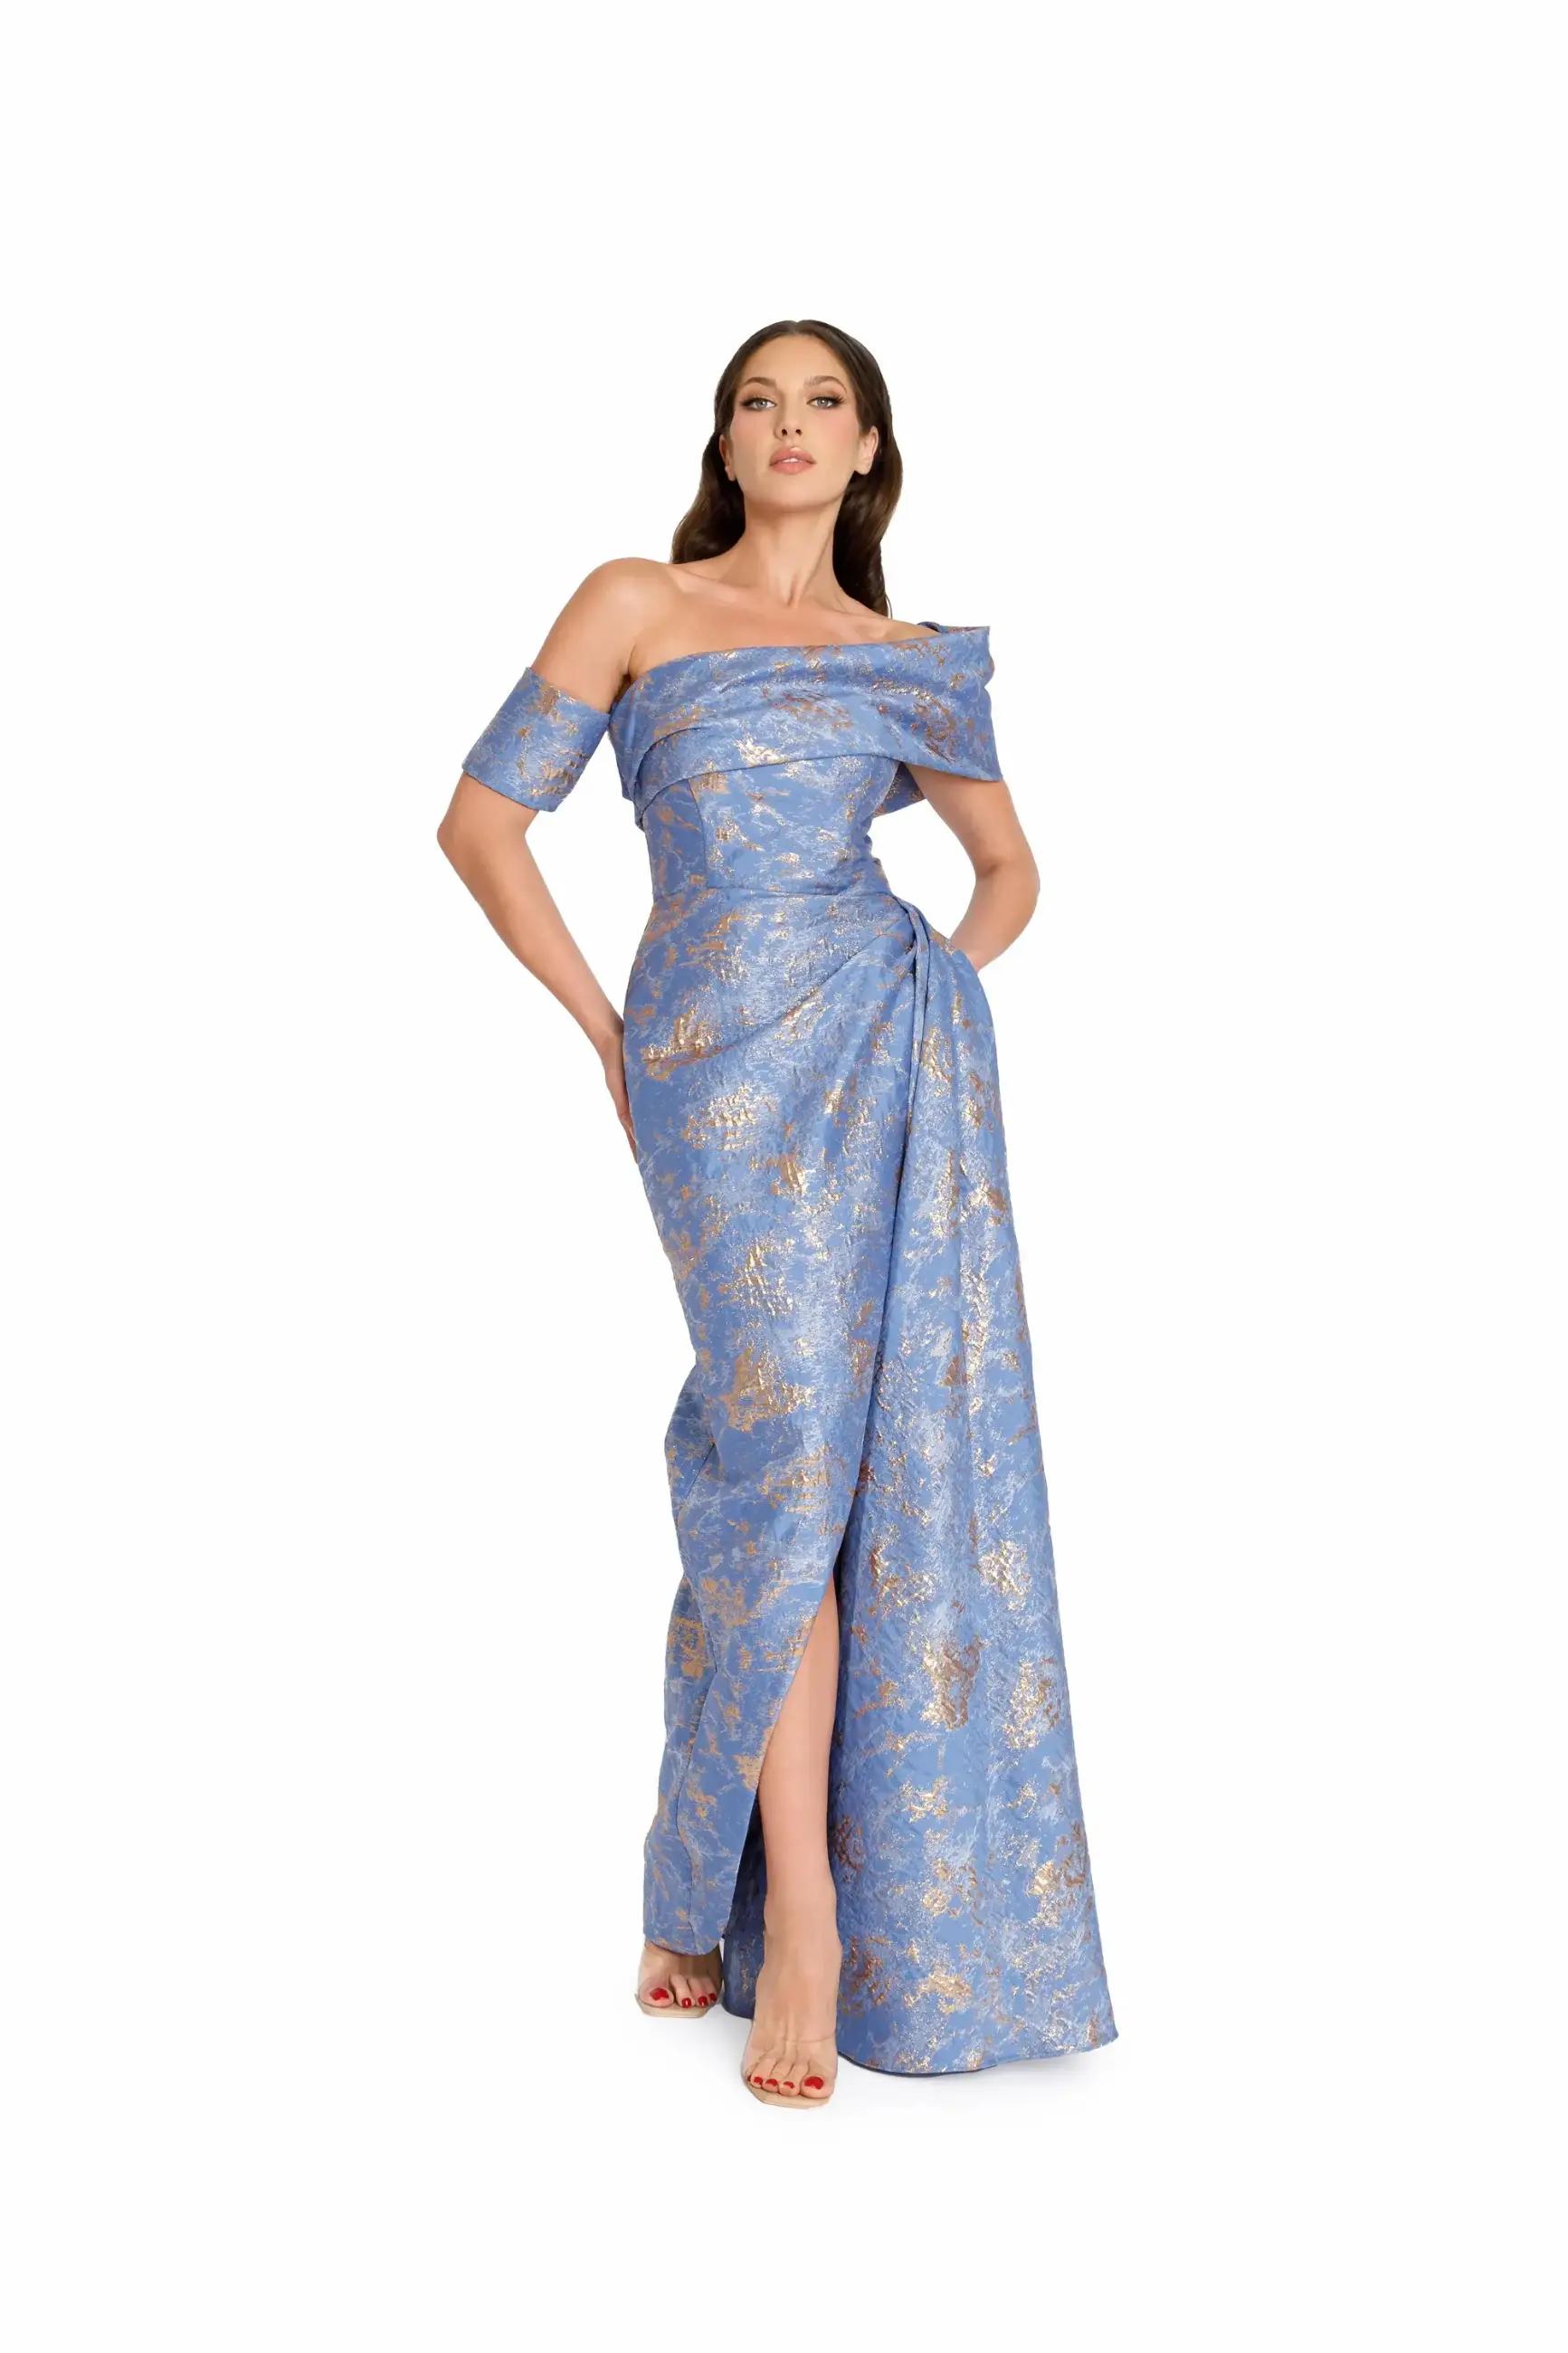 Model wearing a long dark blue evening gown